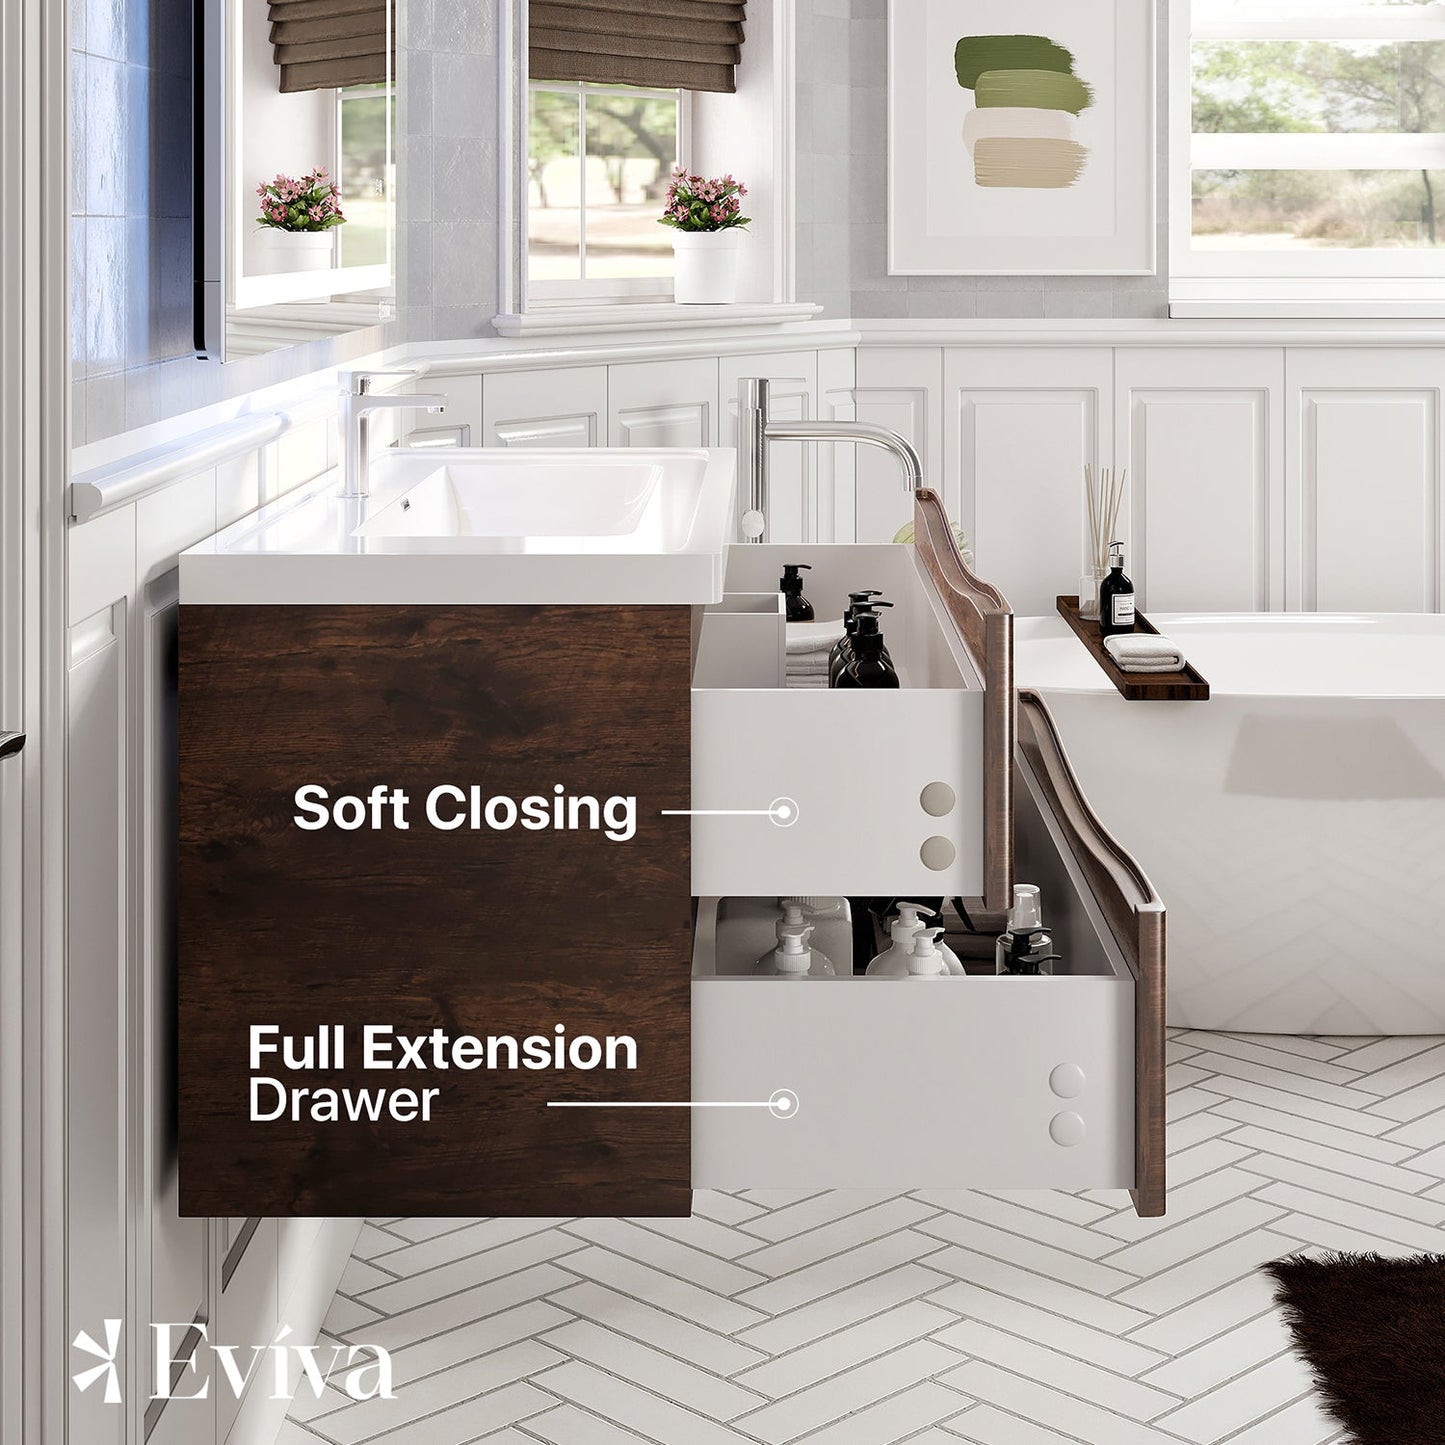 Eviva Smile 48" Rosewood Wall Mount Modern Bathroom Vanity w/ White Integrated Top